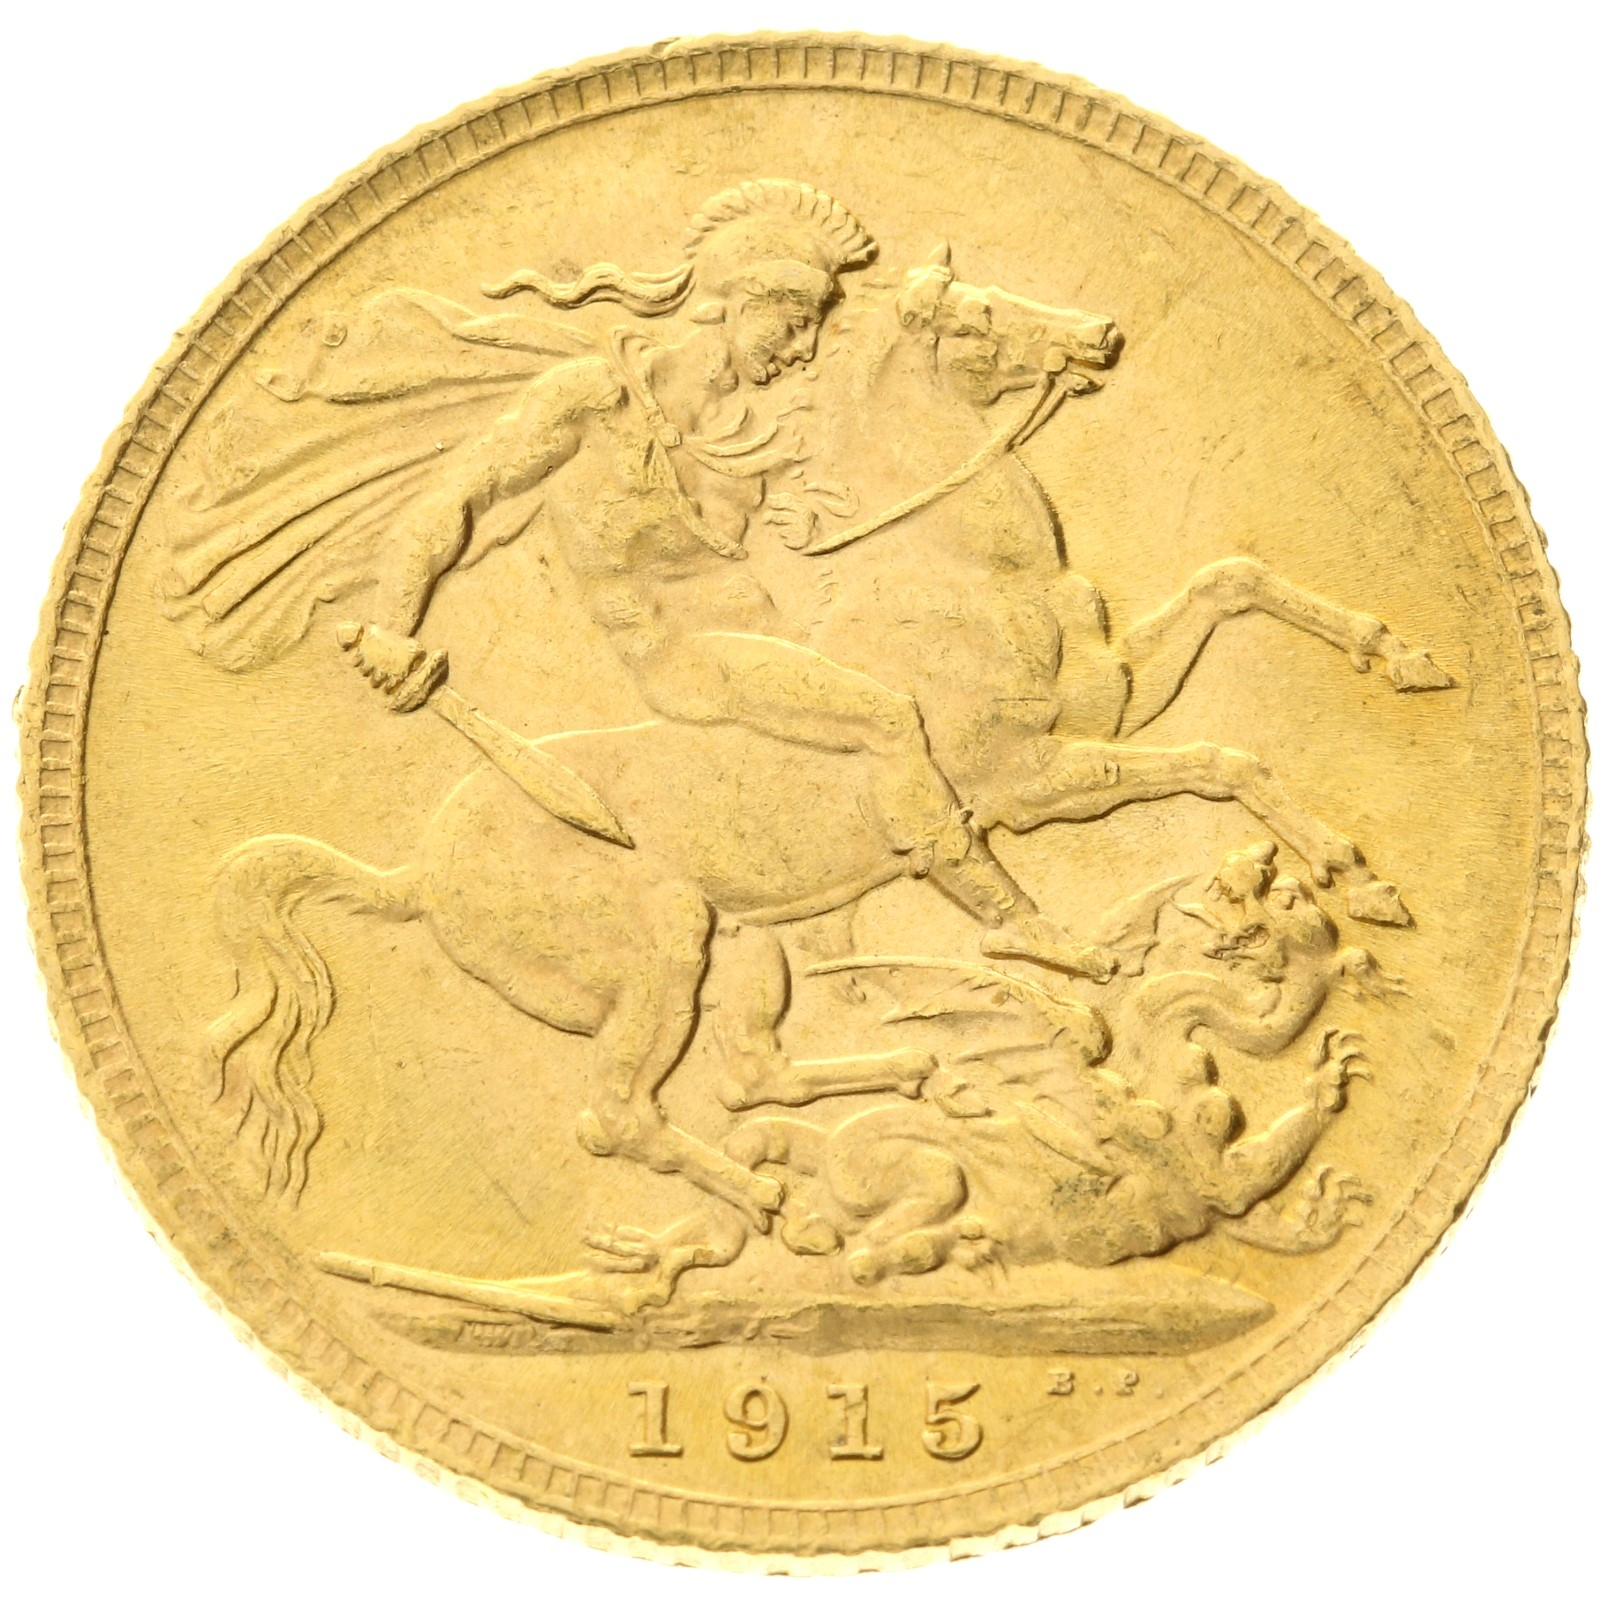 United Kingdom - 1 Sovereign - 1915 - George V